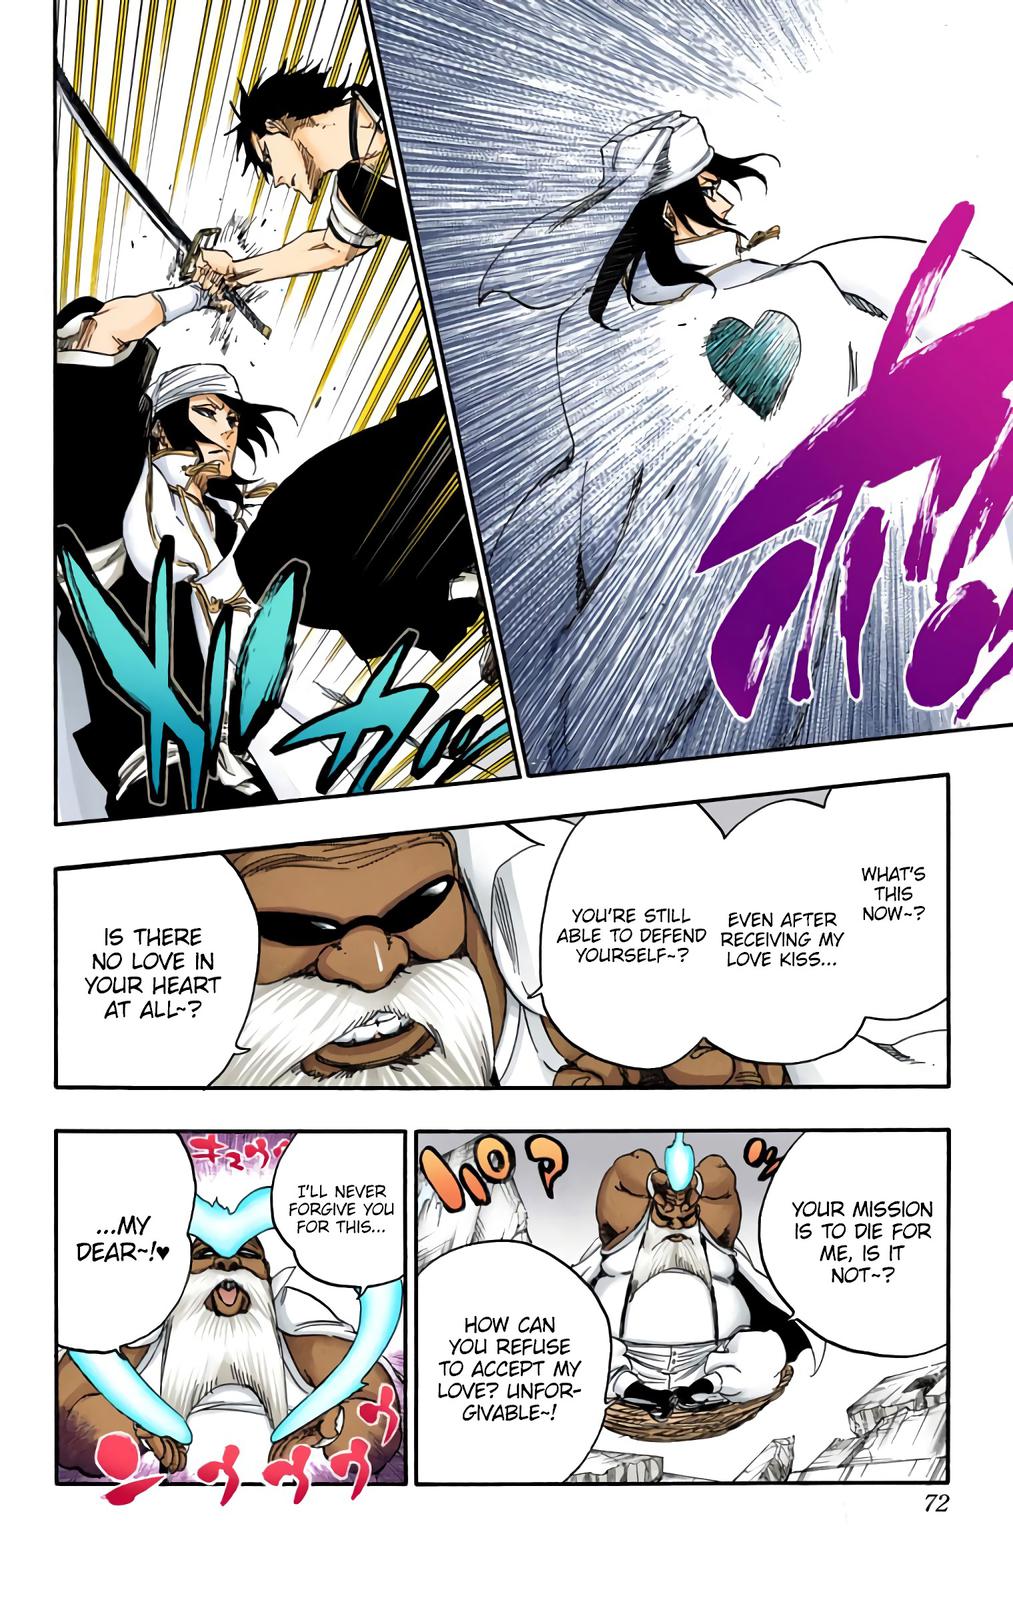 Bleach Digital Colored Comics Chapter 595 | Read Bleach Manga Online